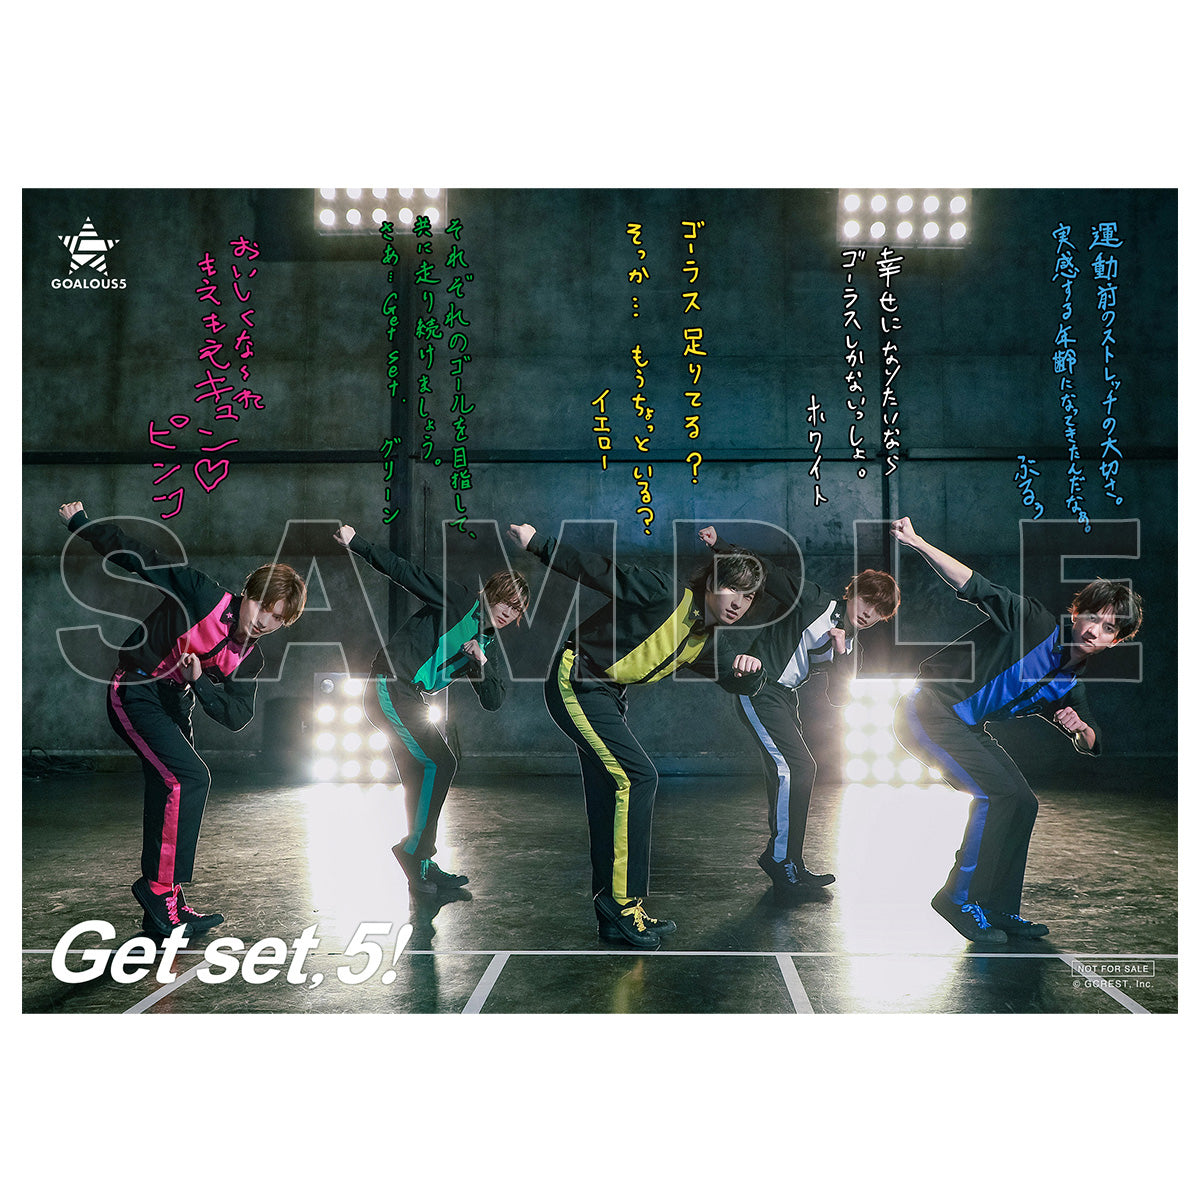 GOALOUS5 『Get set, 5！』MV盤（CD＋Blu-ray） – GCRESTORE